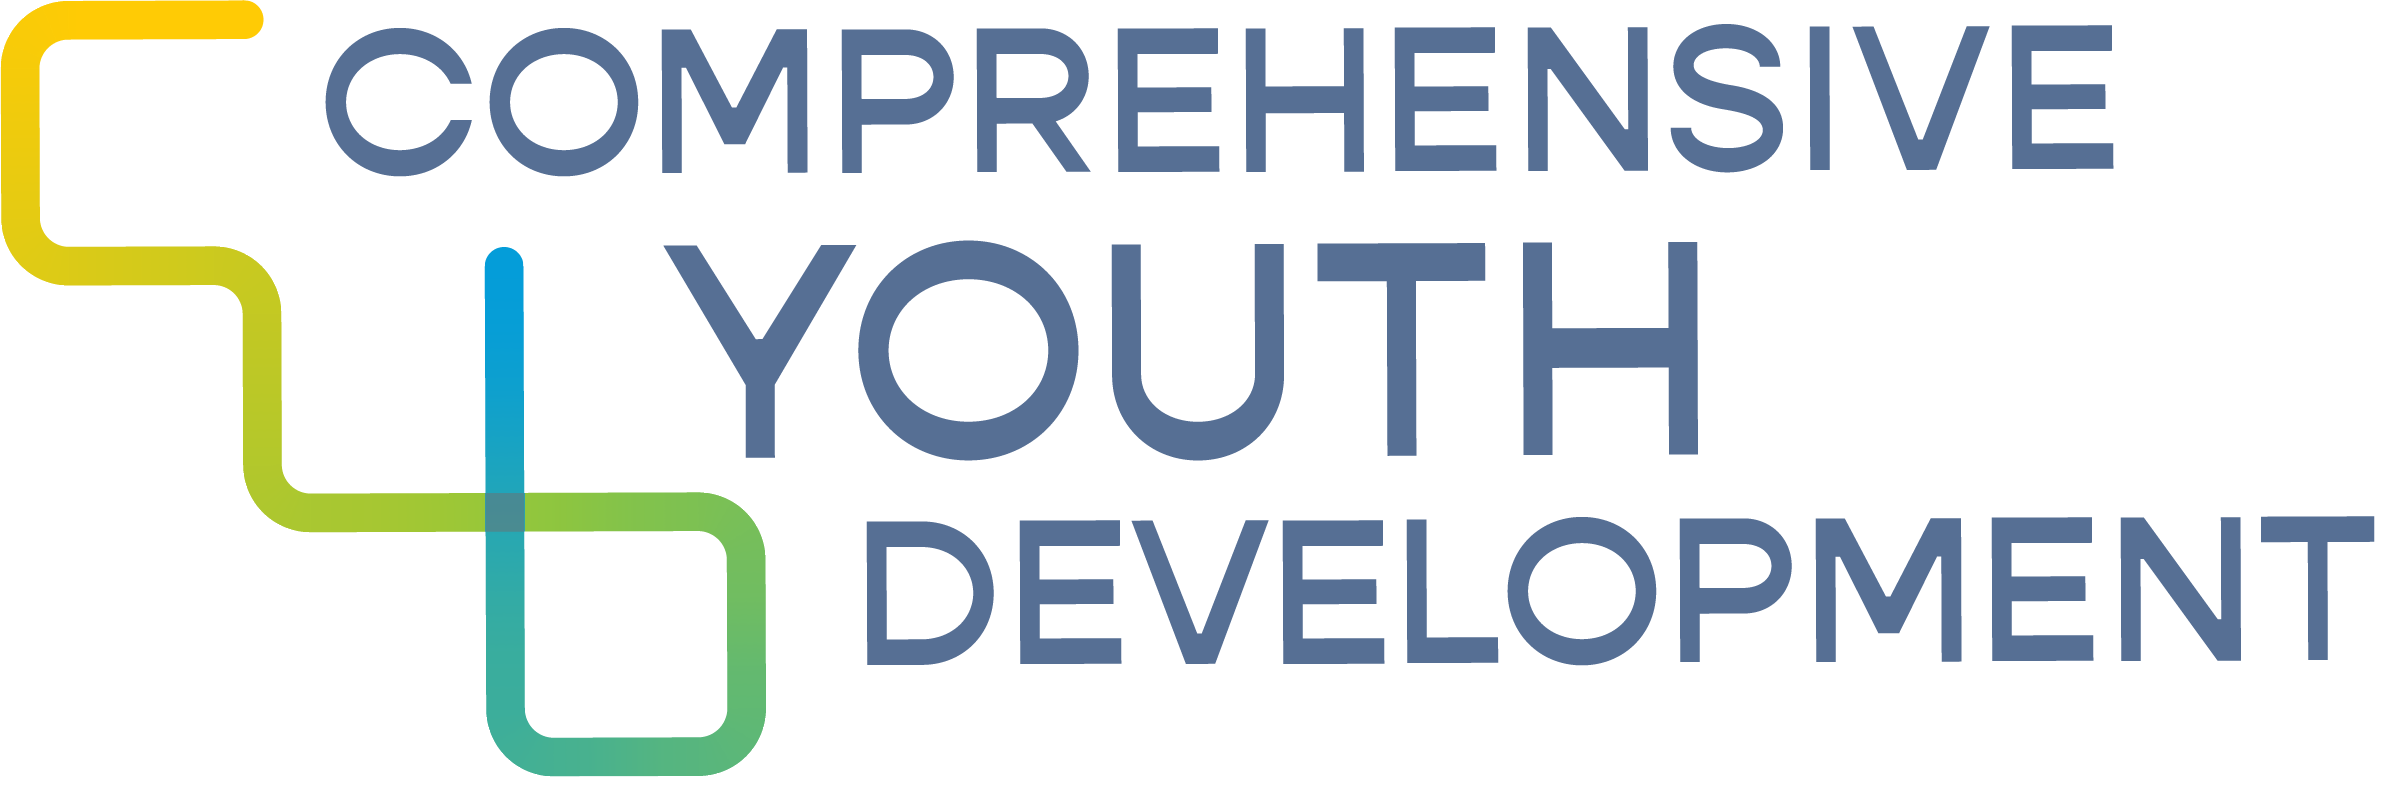 Comprehensive Youth Development